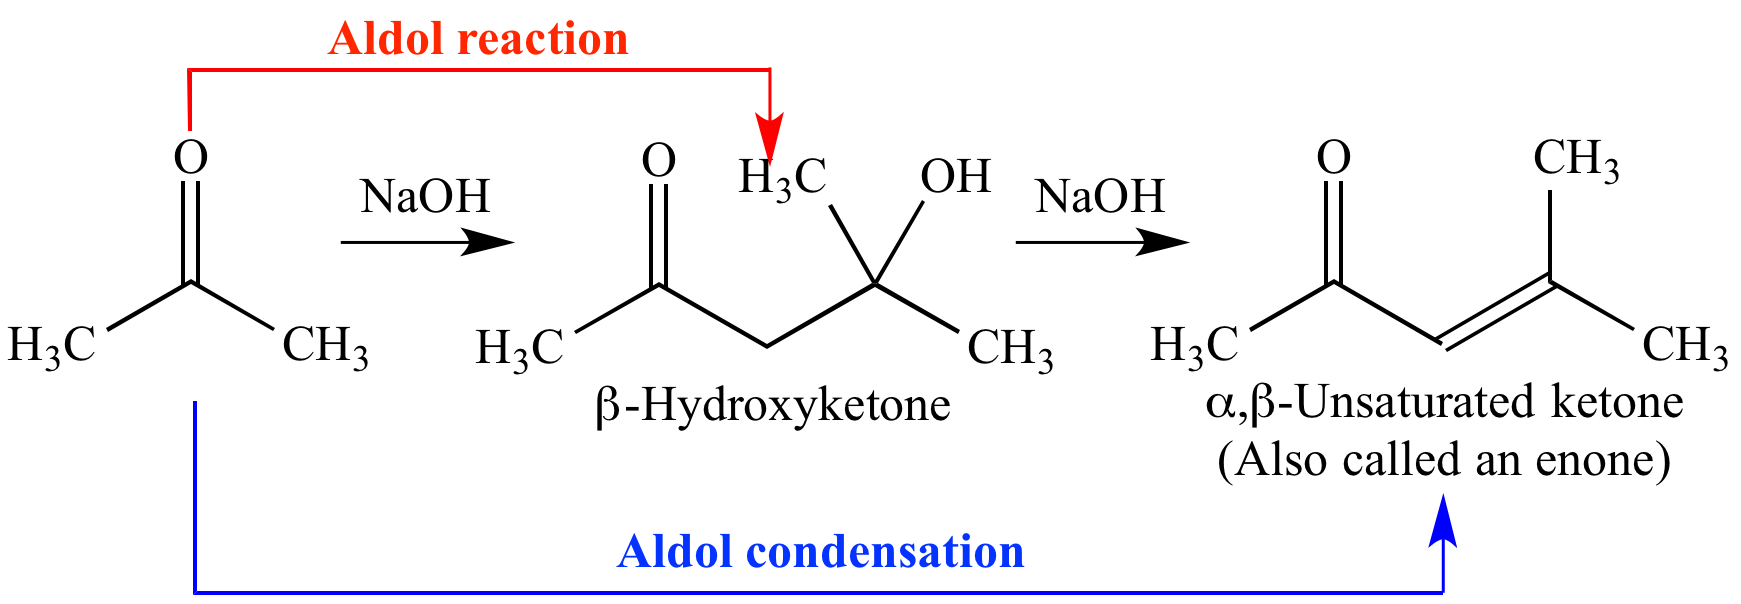 aldol condensation products formed